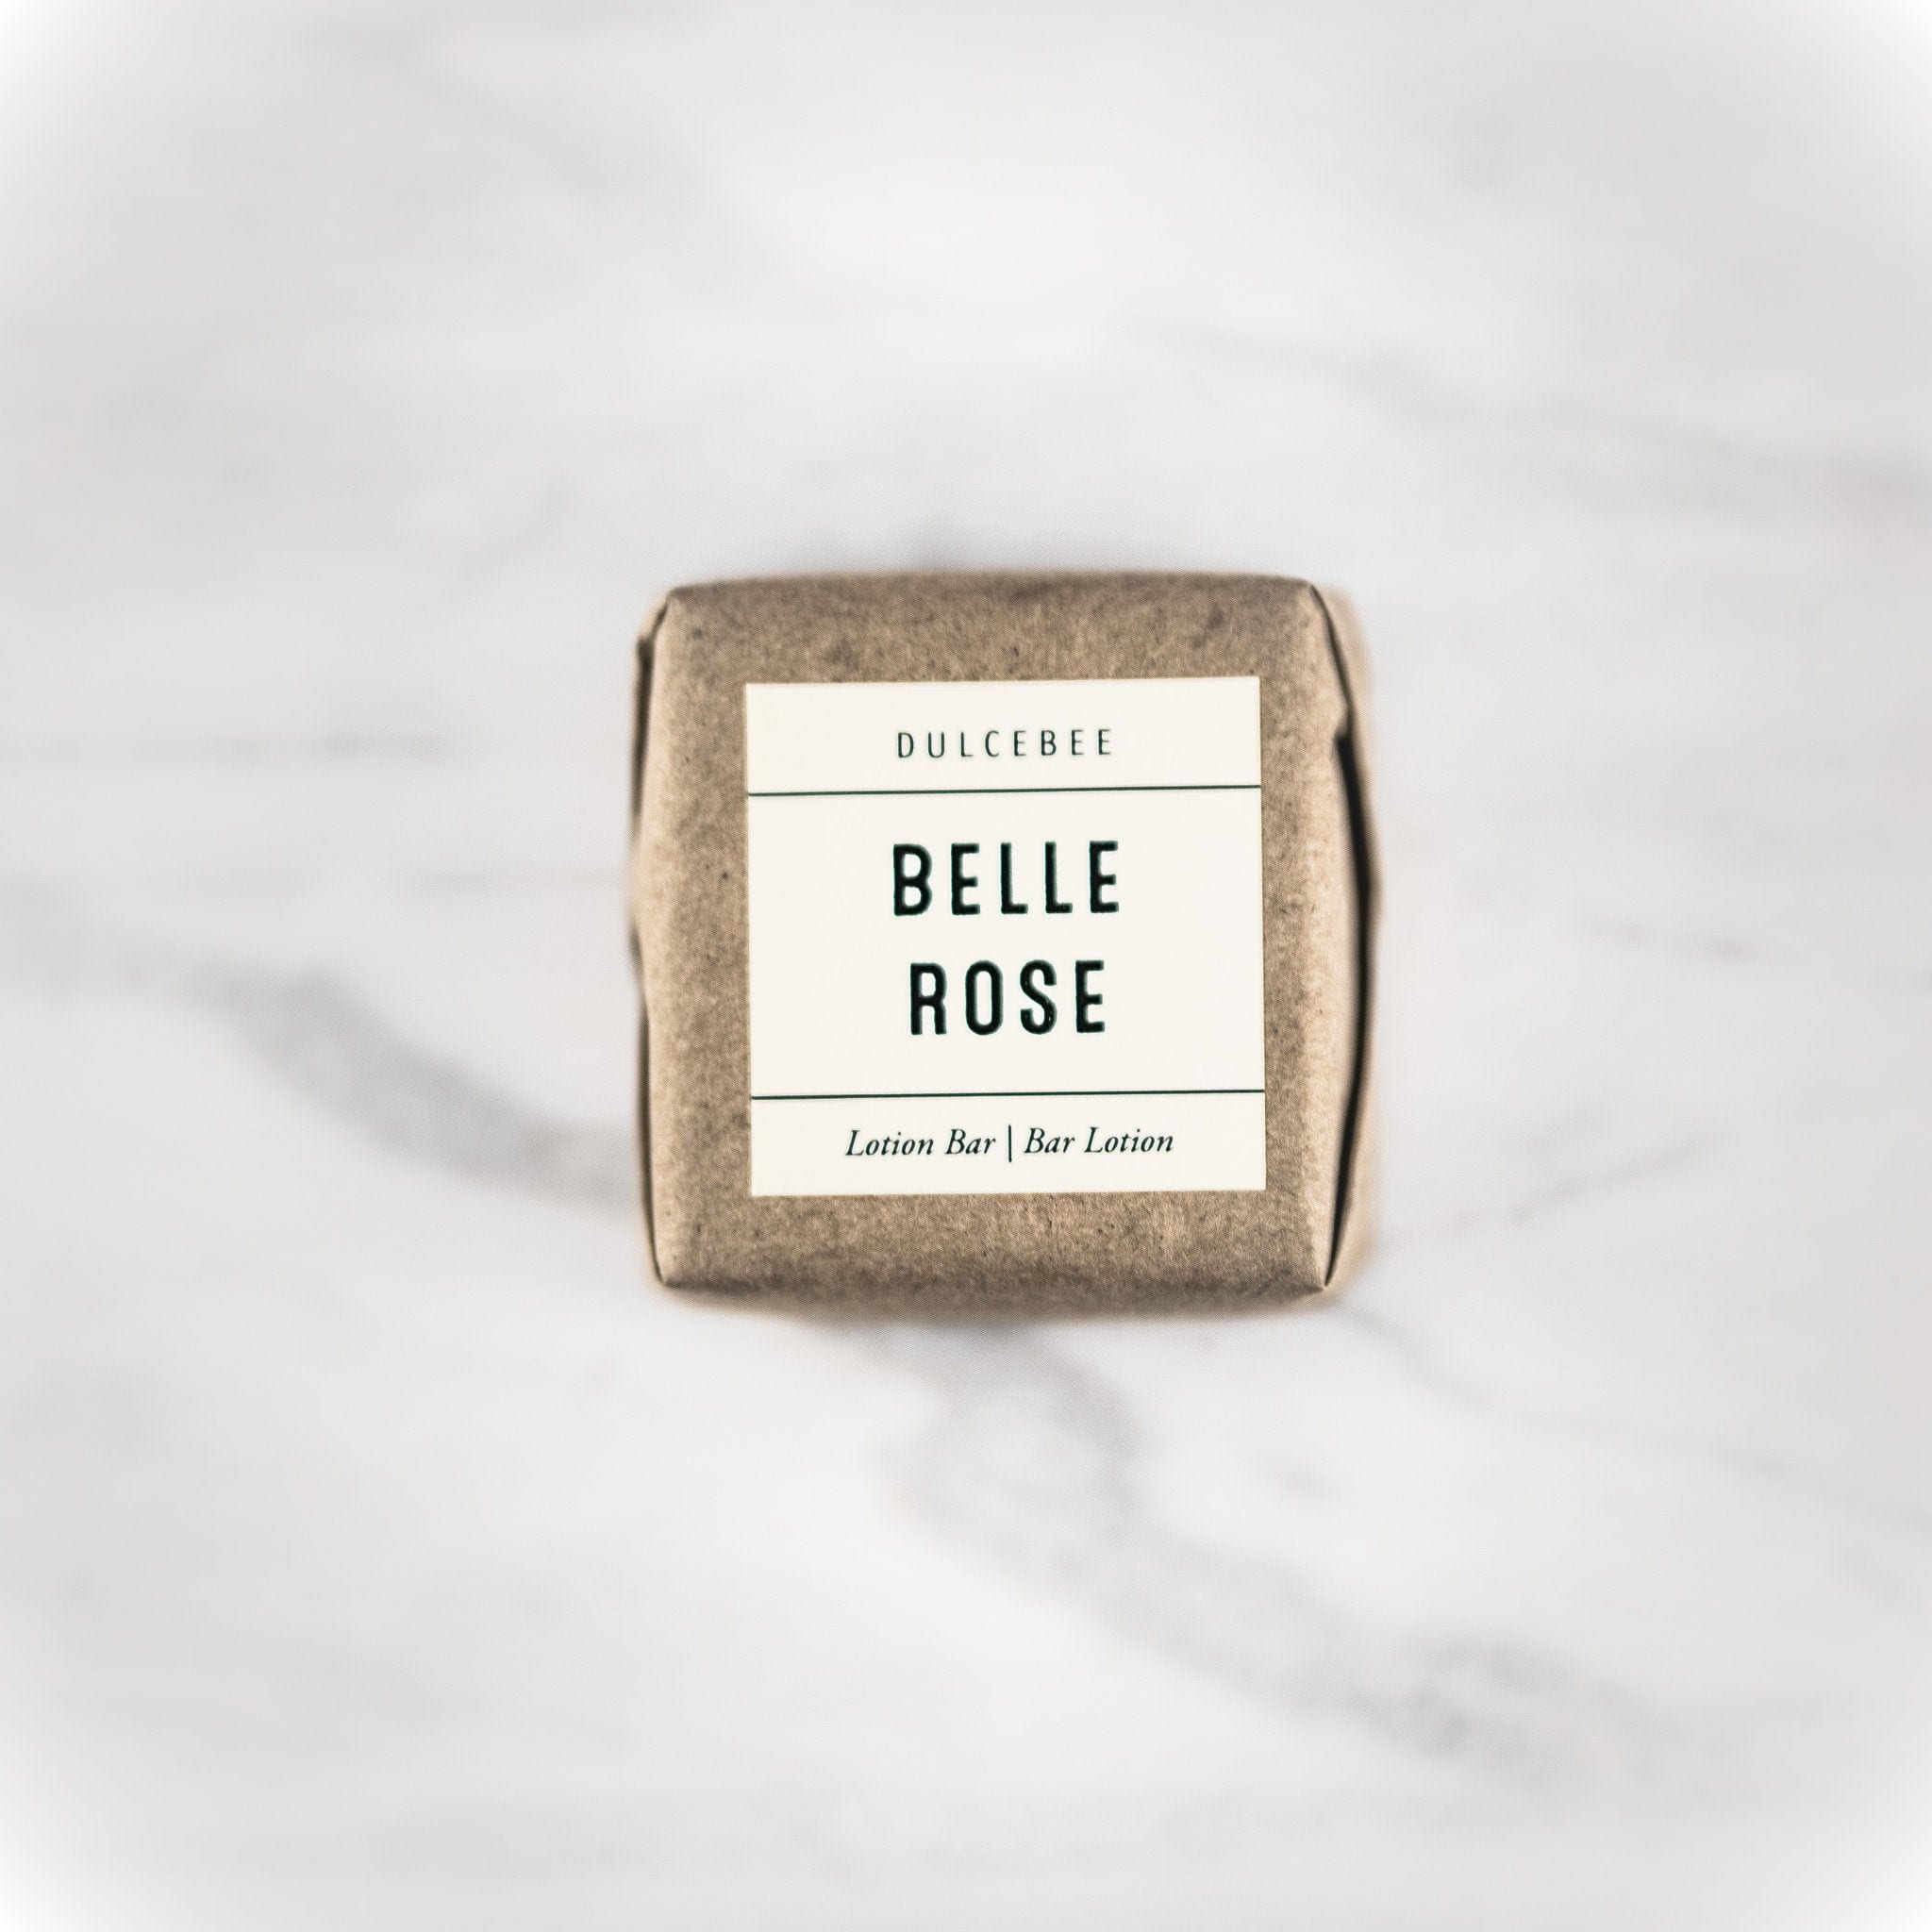 Barre de lotion - Belle Rose par DulceBee vendu par SignéLocal.com